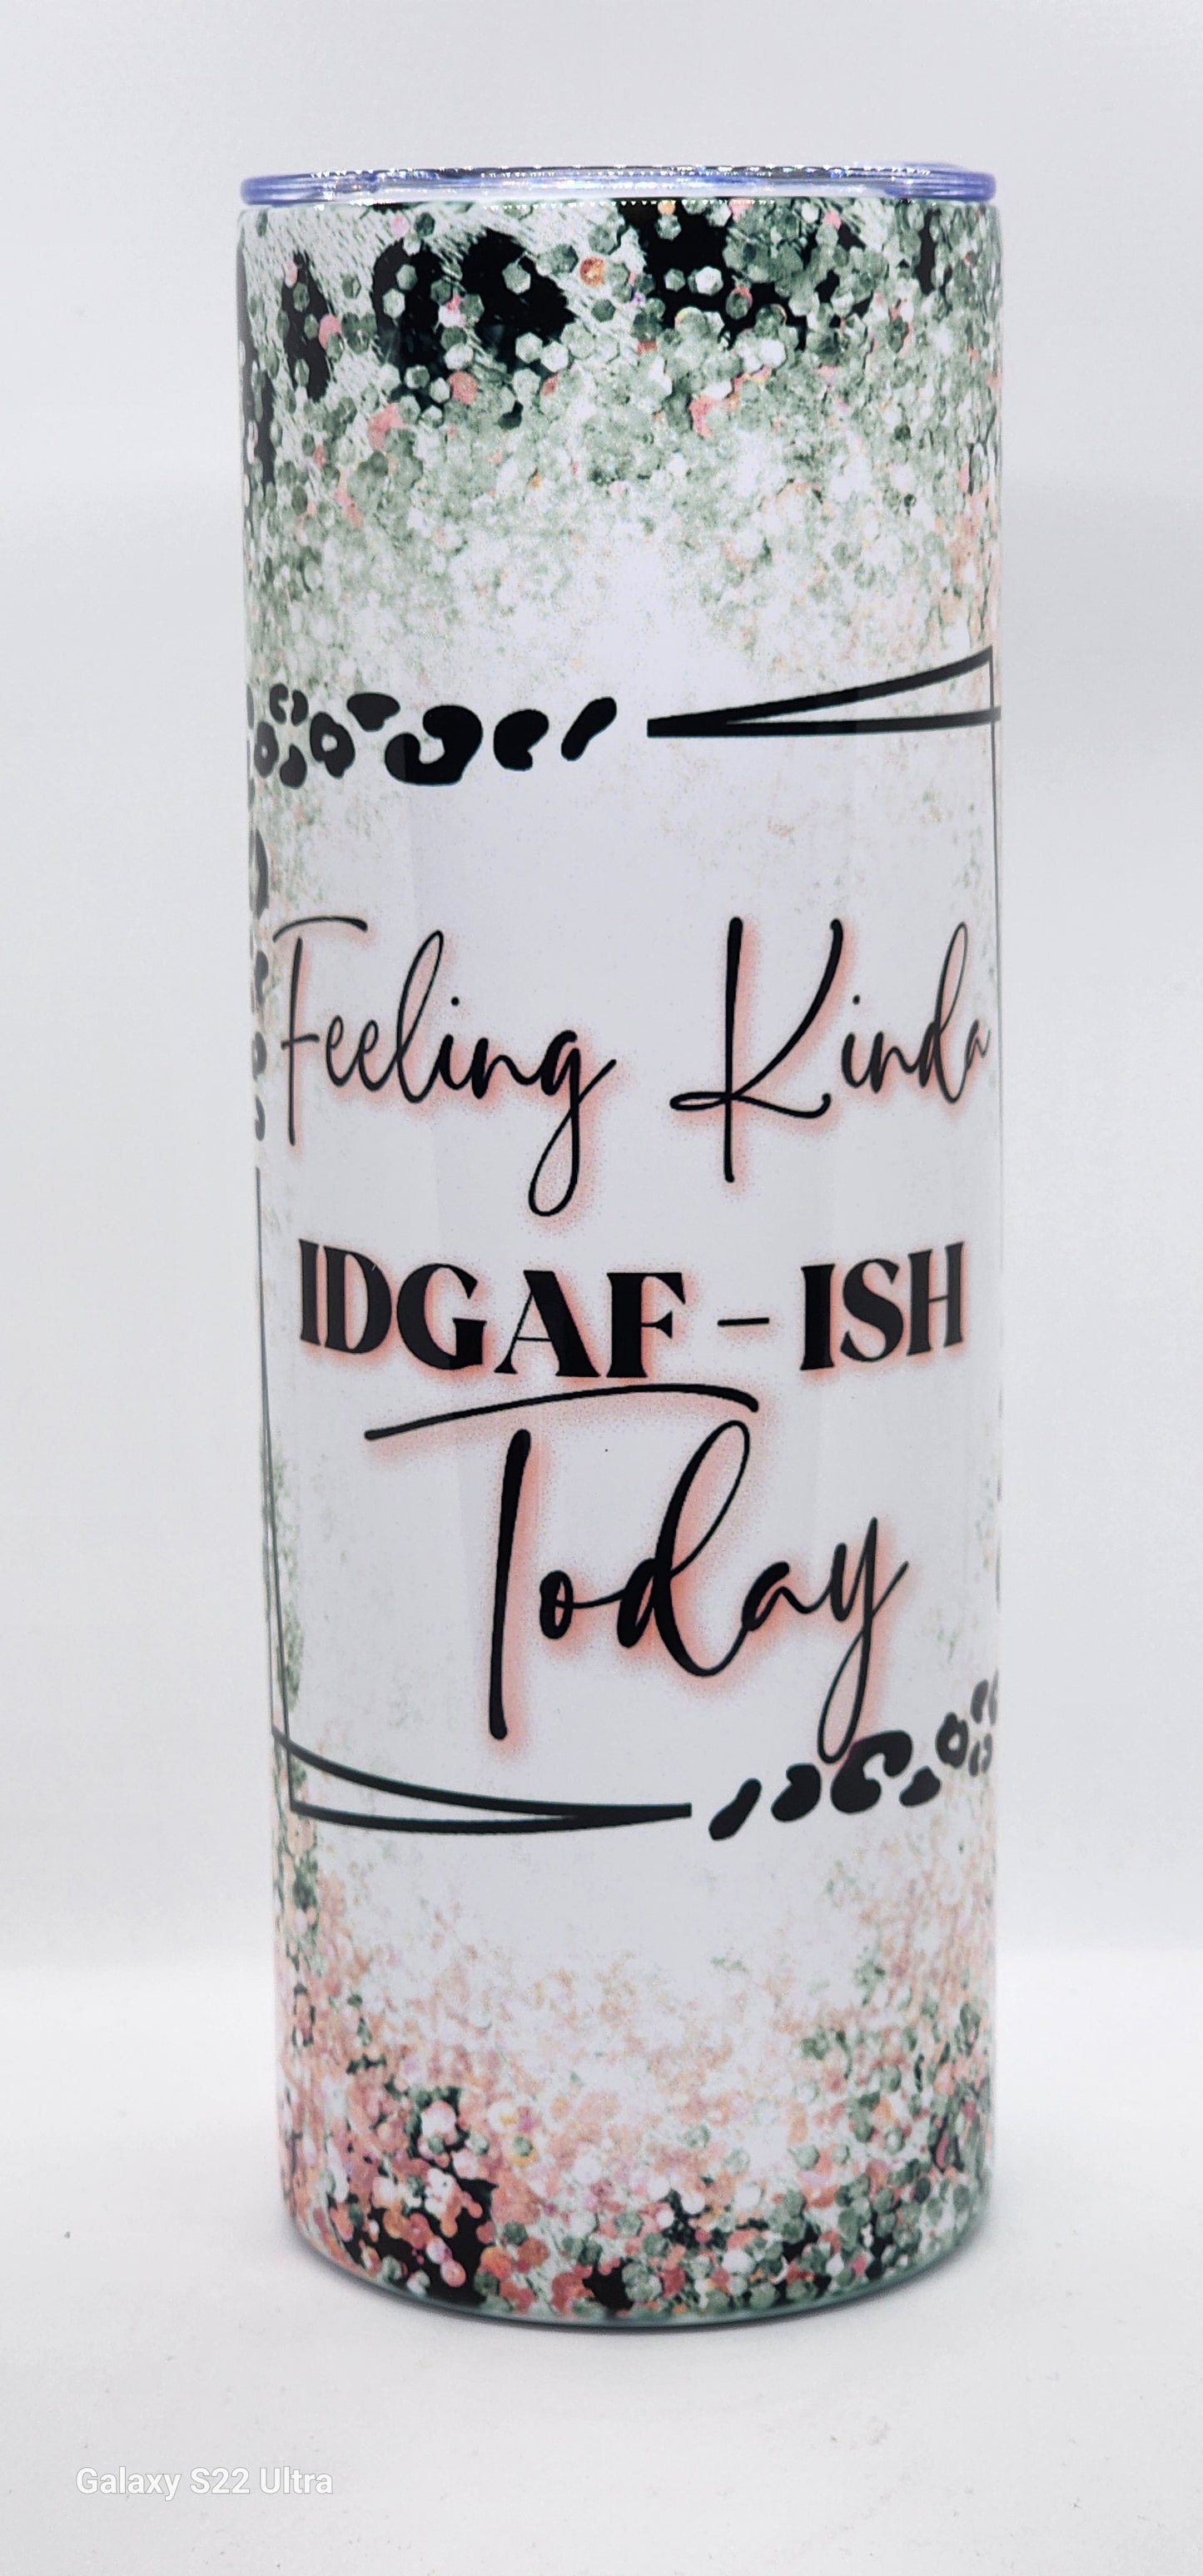 Feeling IDGAF - ISH